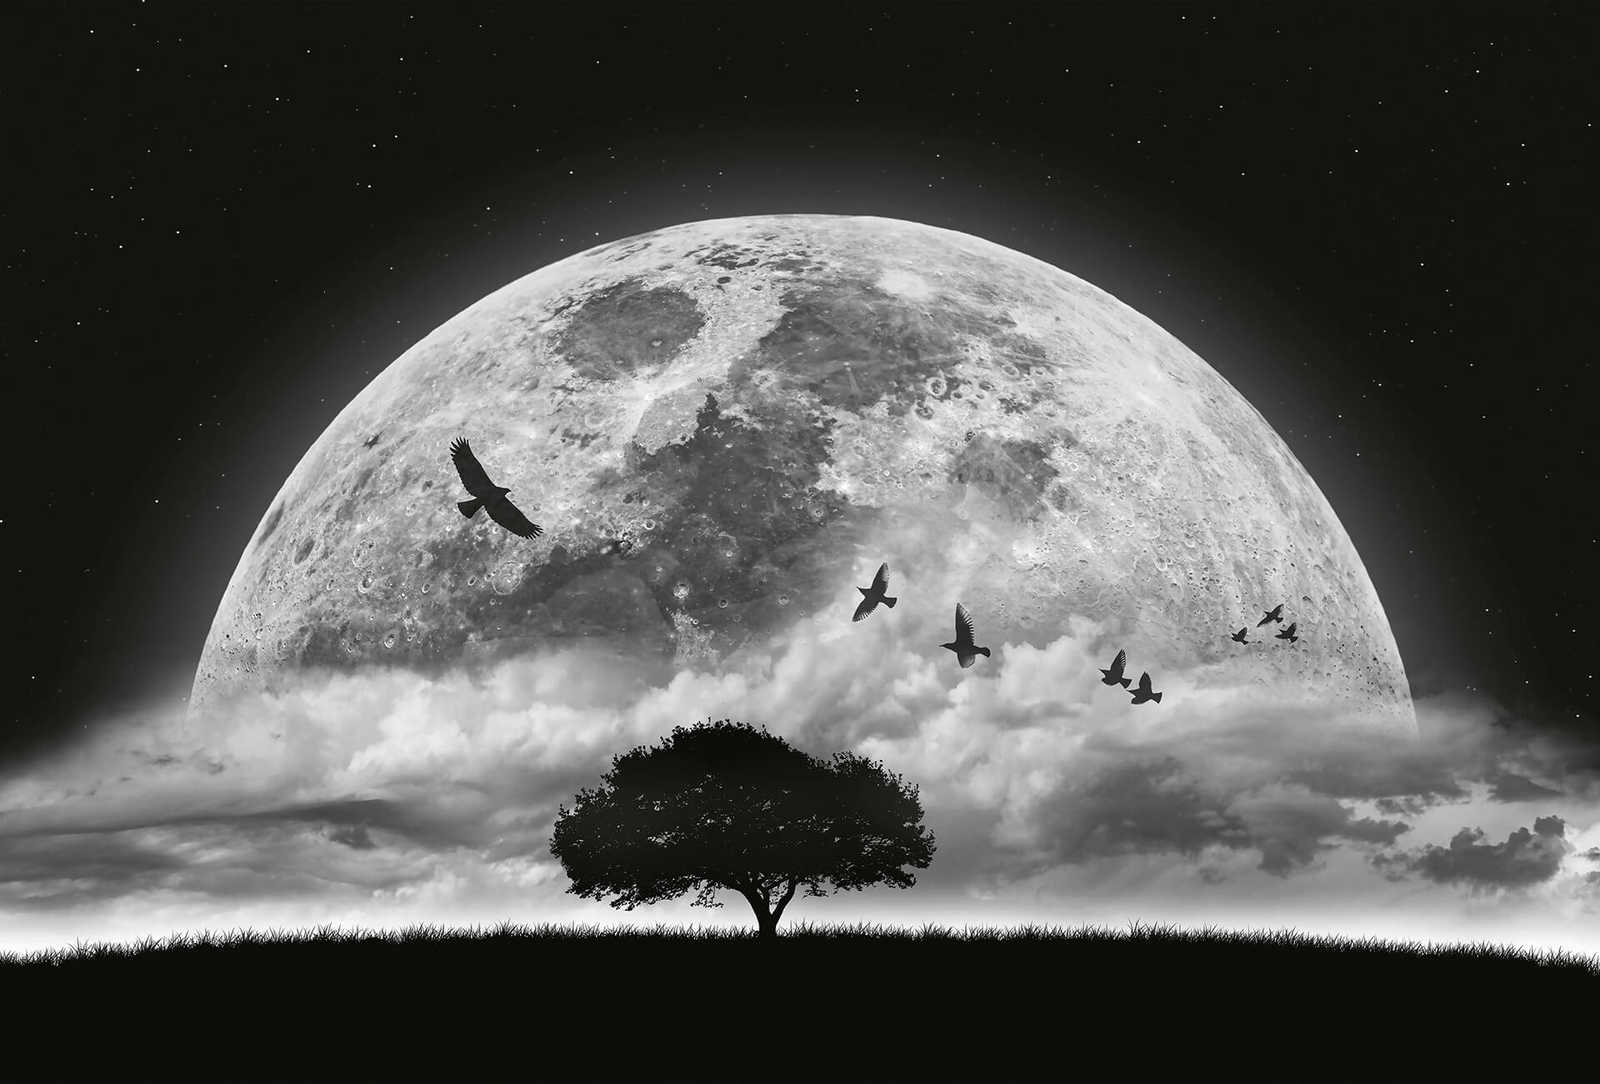         Photo wallpaper Moon and Birds - Black, White
    